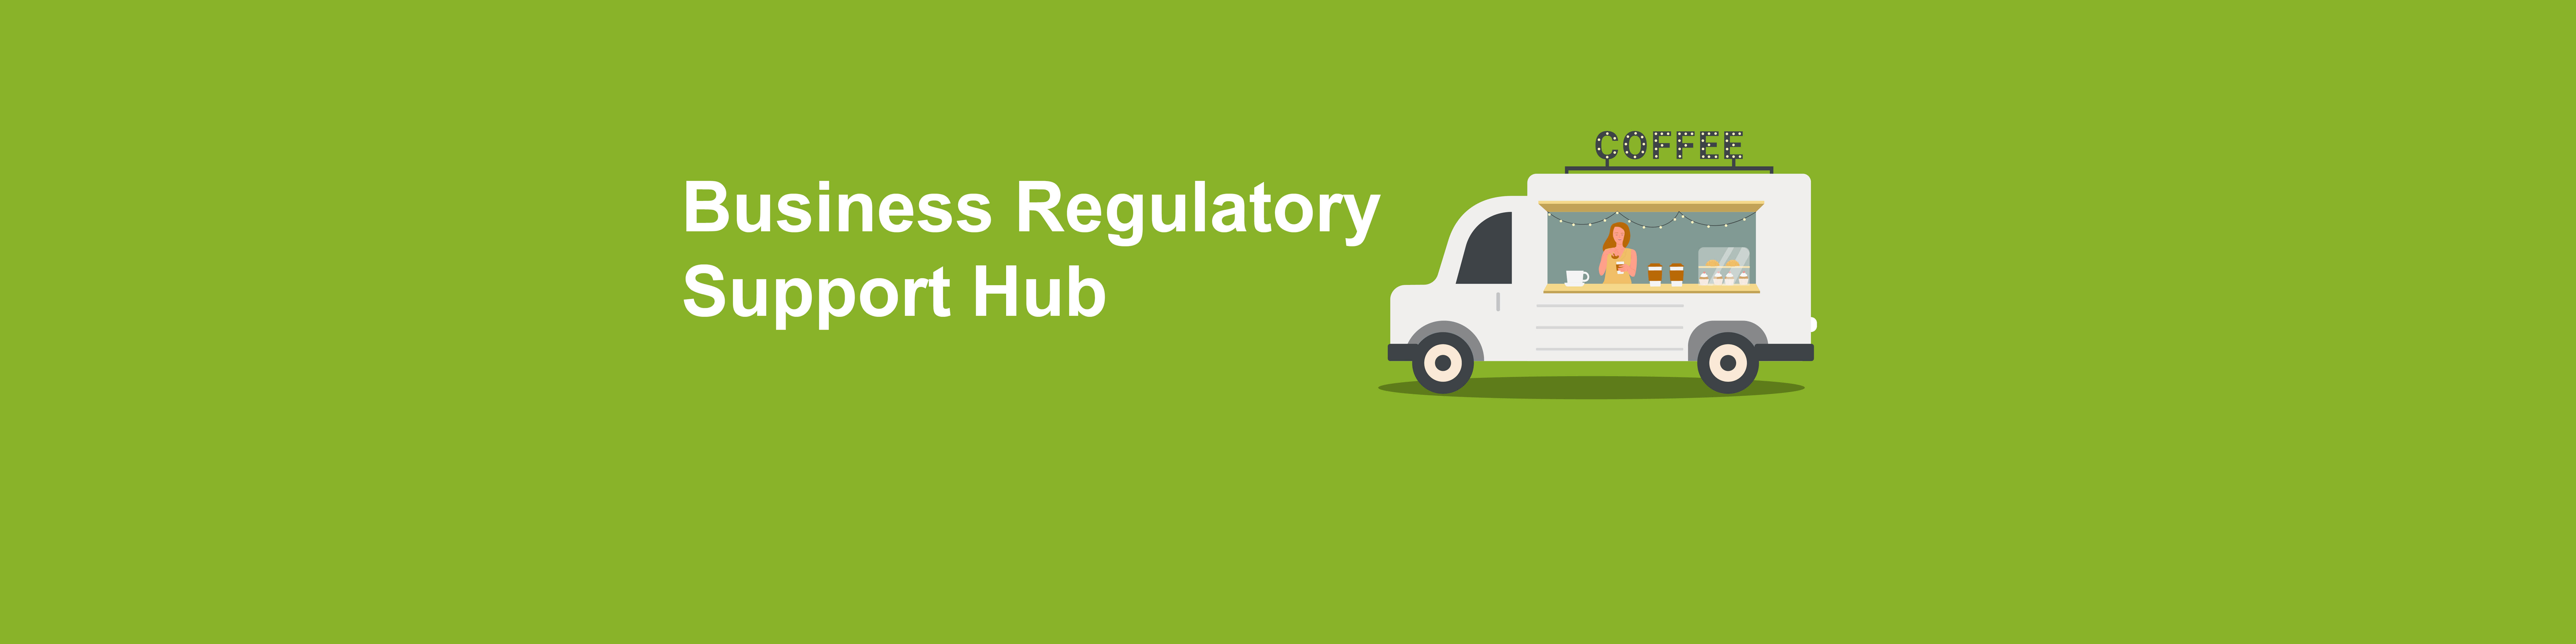 Business Regulatory Hub - graphic of food van